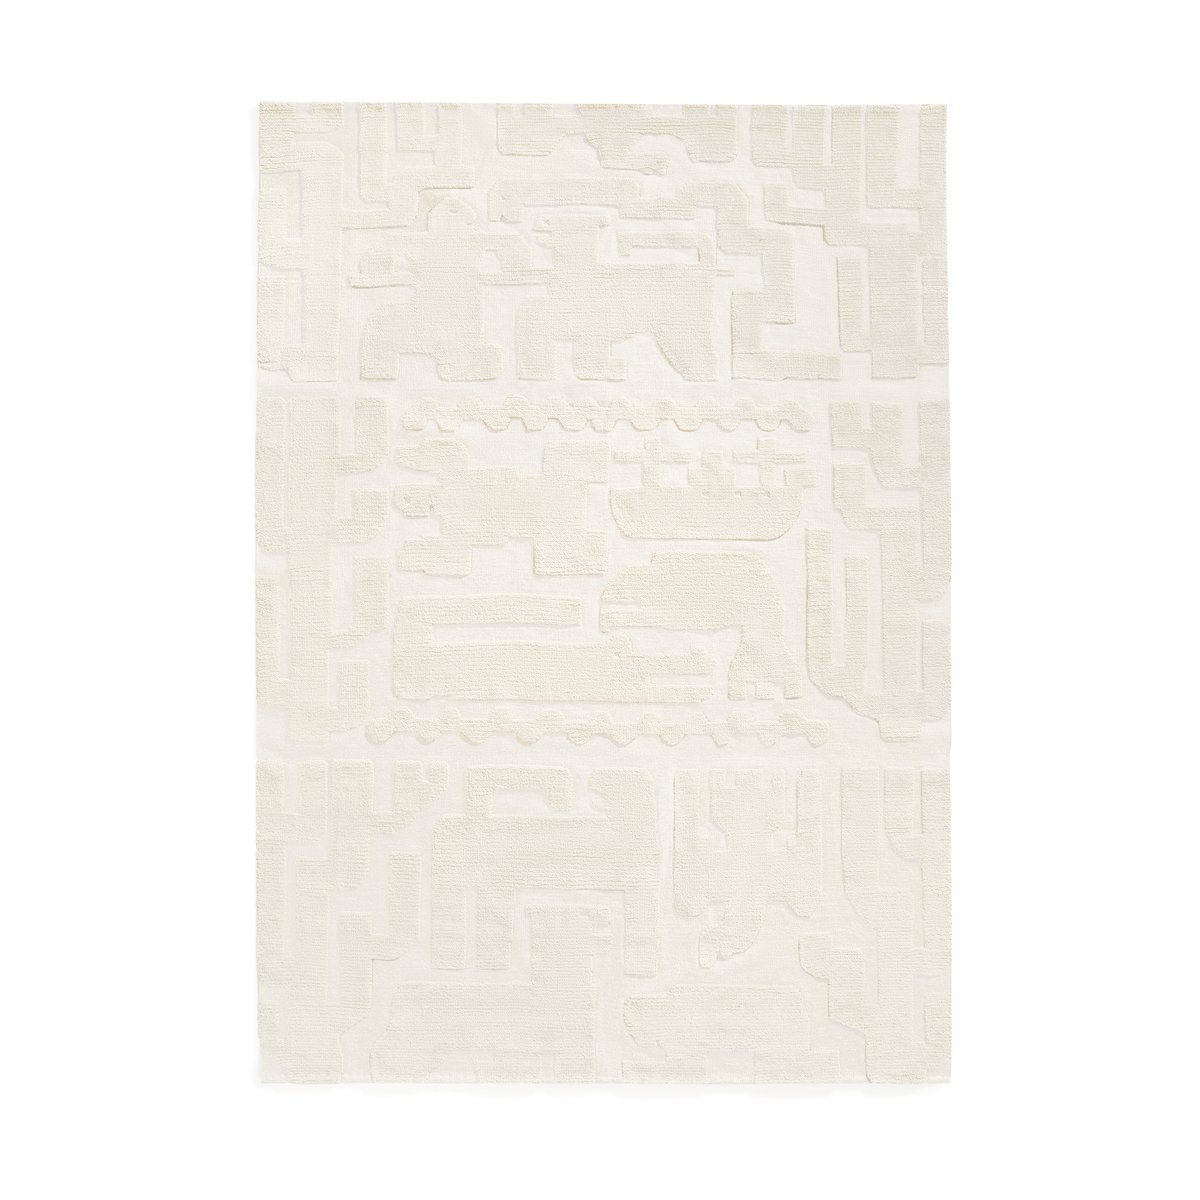 Layered Stig Lindberg Gunnel -villamatto Bone white 300 x 400 cm